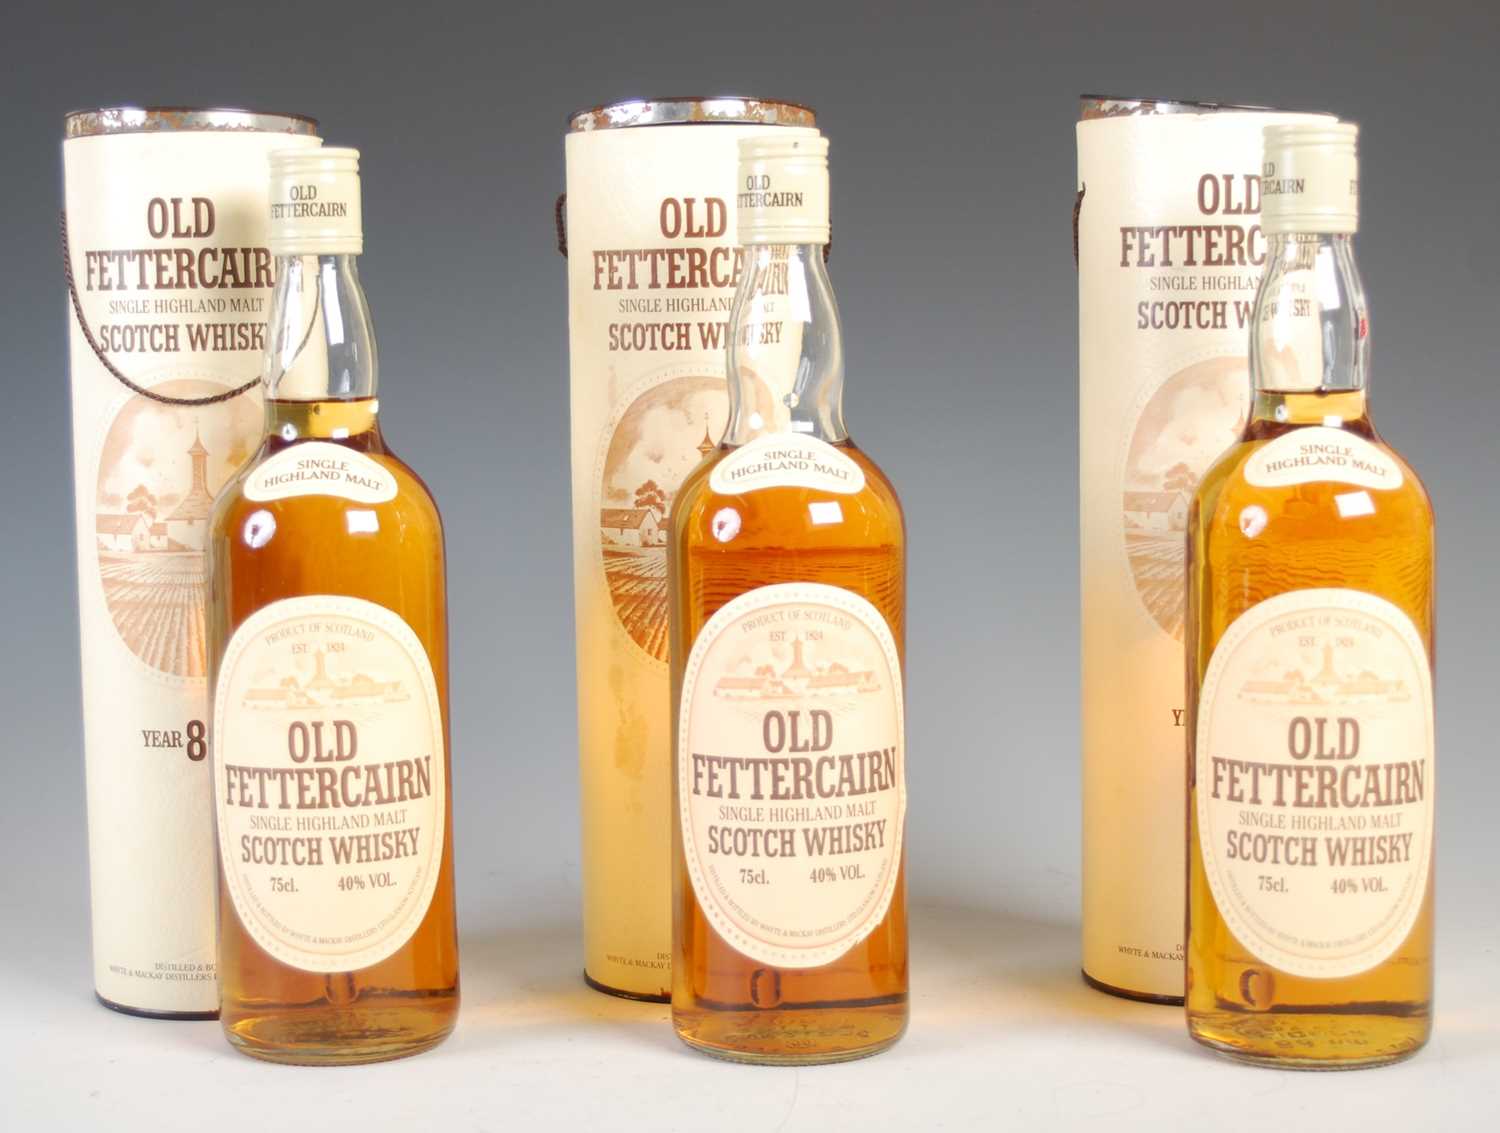 Three boxed bottles of Old Fettercairn single Highland malt Scotch whisky, 75cl, 40% Vol. (3).